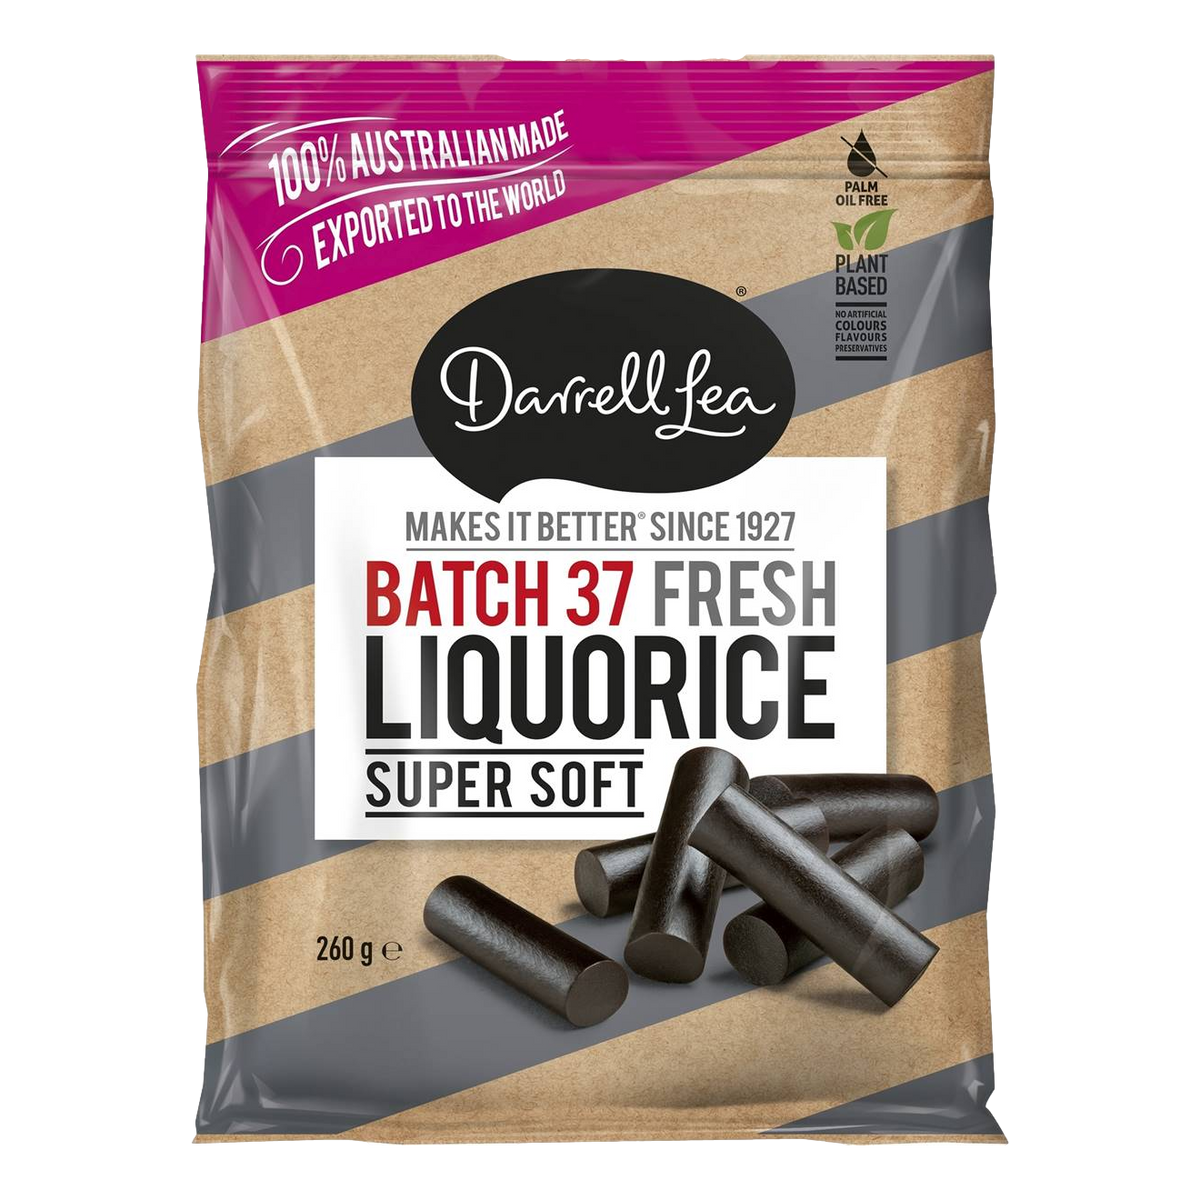 Darrell Lea Batch 37 Fresh Super Soft Liquorice 260g